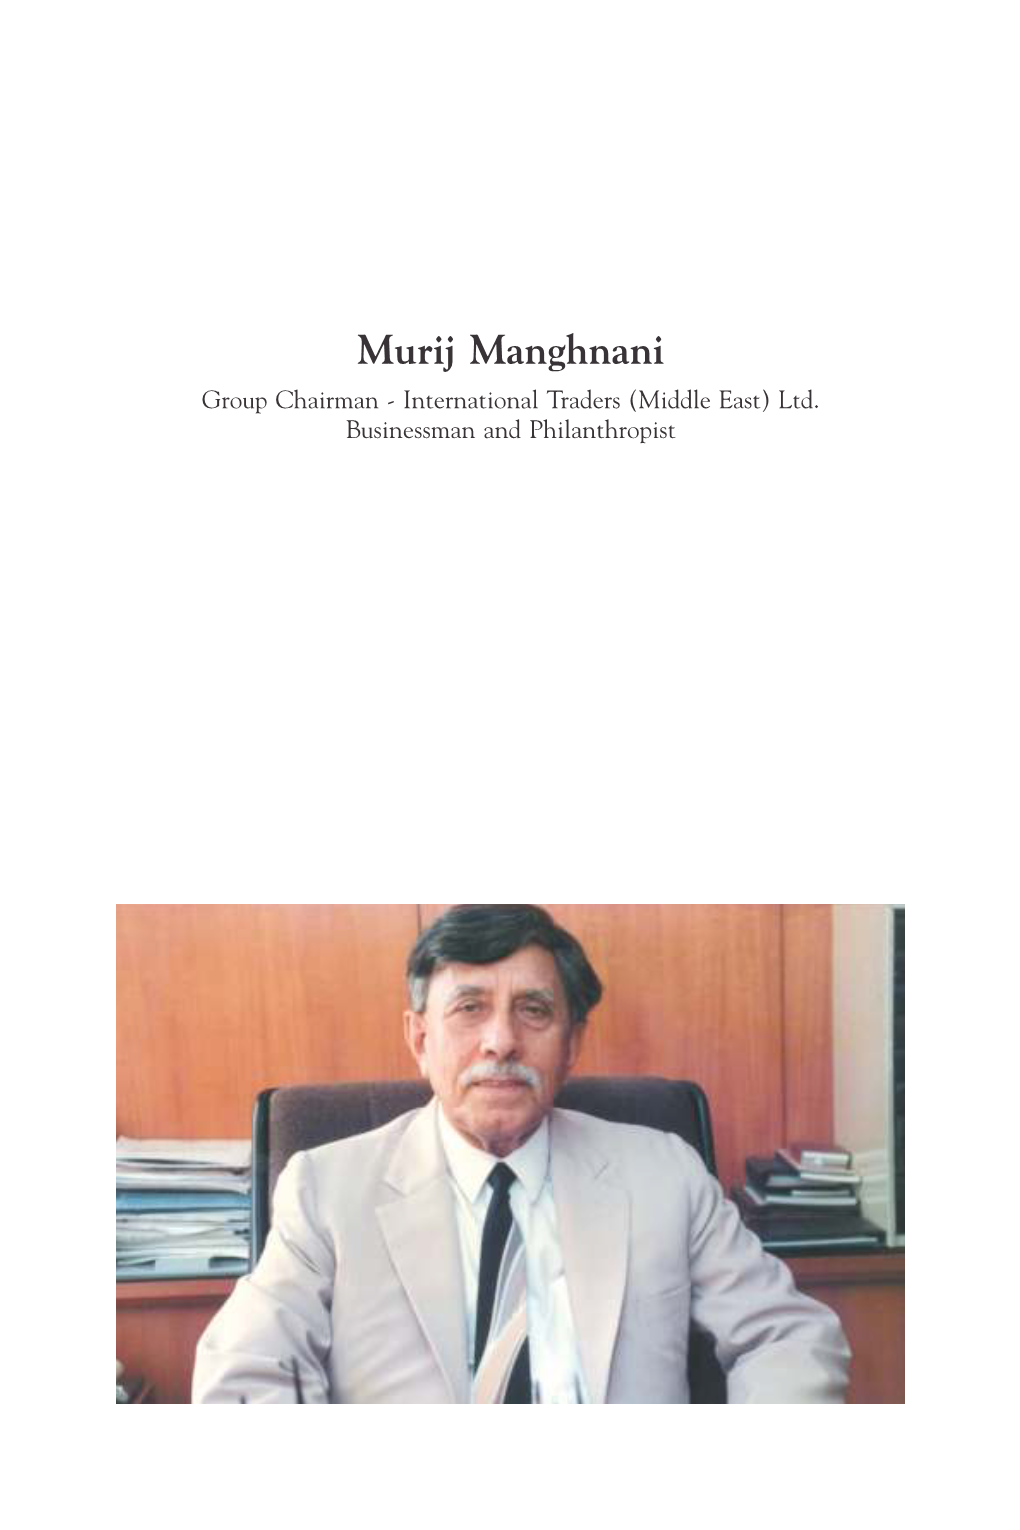 Murij Manghnani